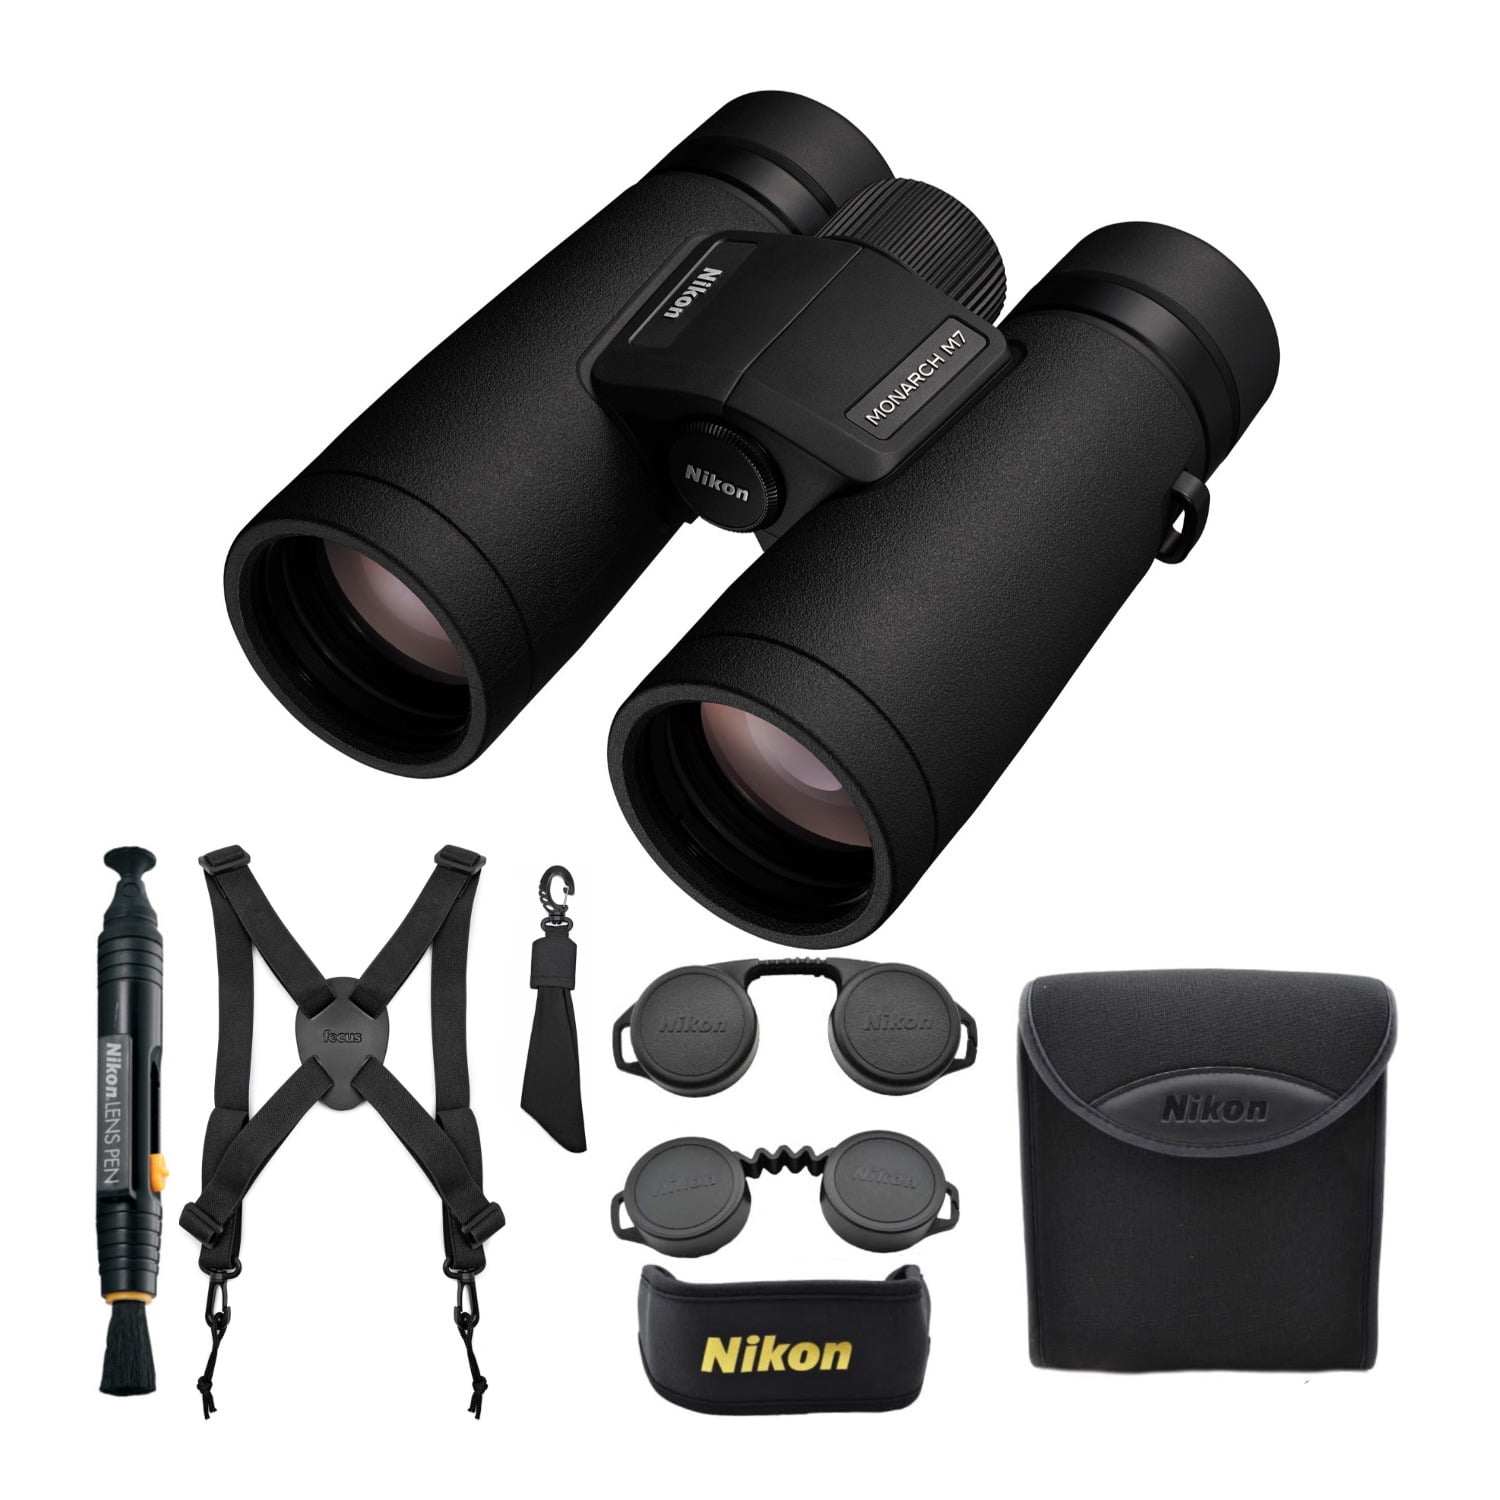 Nikon Monarch M7 8x42 Binocular with Nikon Lens Pen and Harness